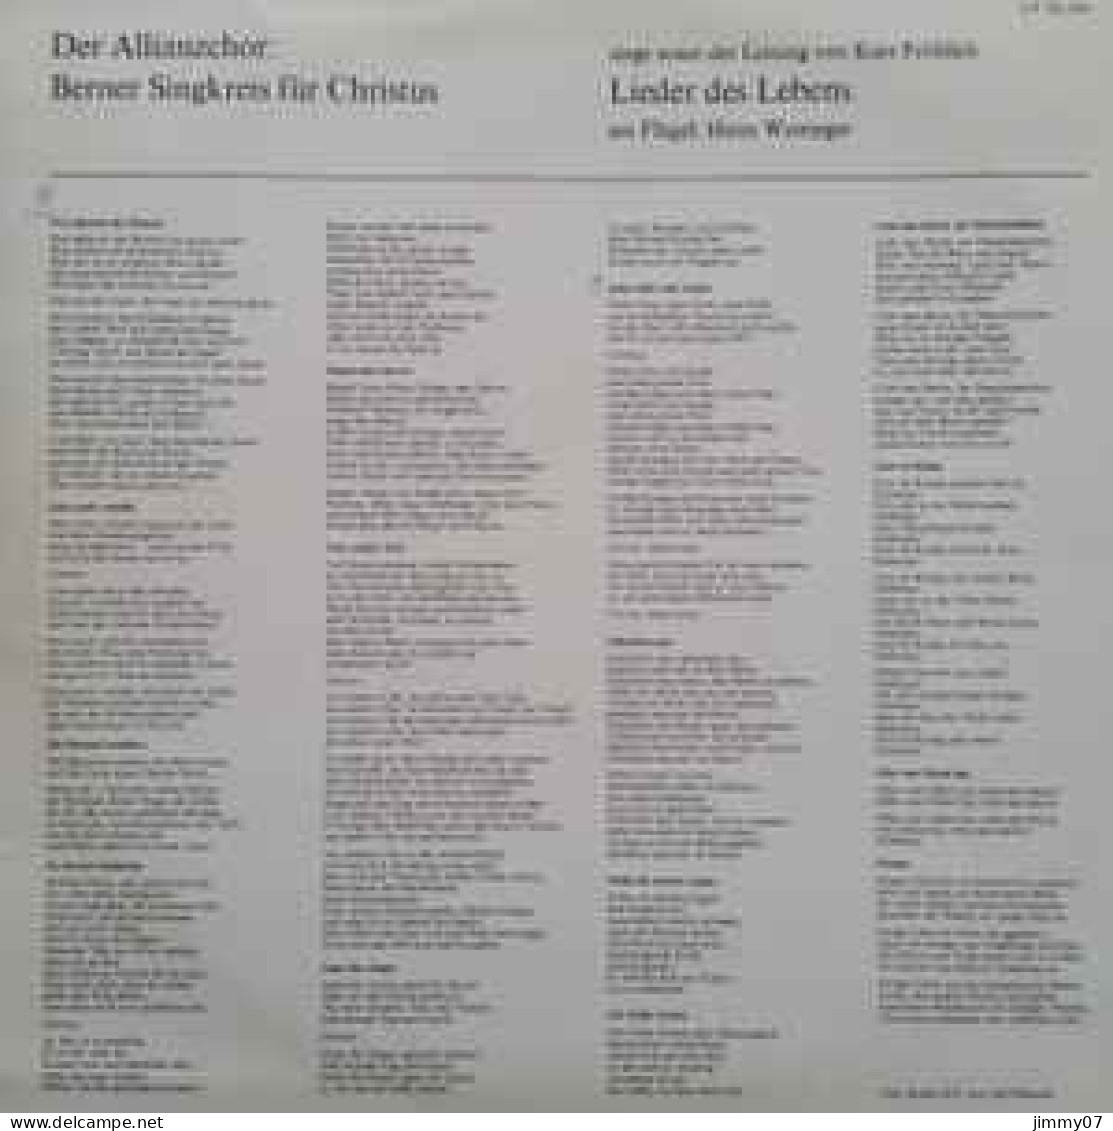 Berner Singkreis Für Christus - Lieder Des Lebens (LP, Album) - Classique